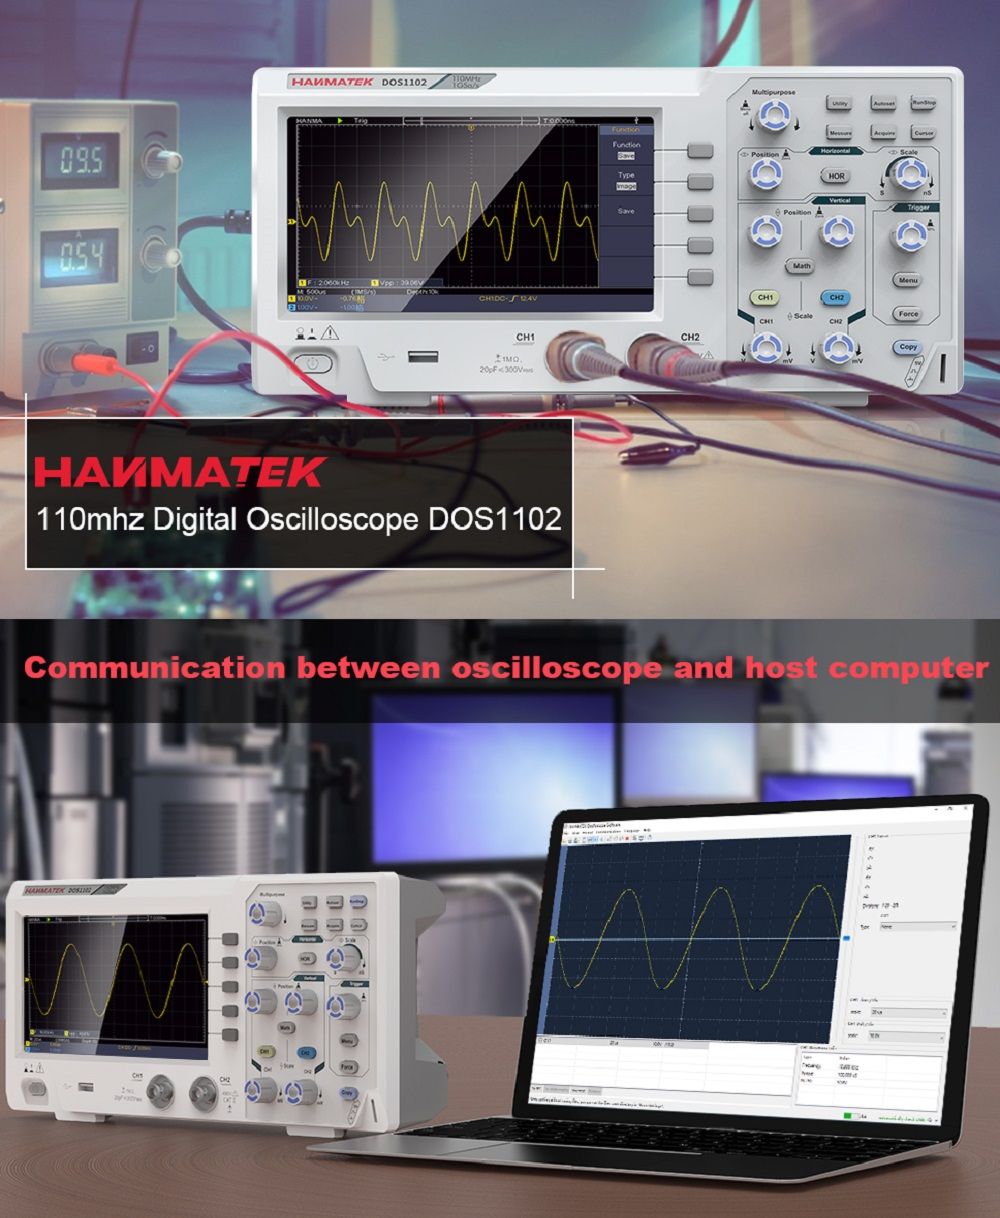 HANMAKET-DOS1102-110MHz-Digital-Oscilloscope-2channel-Oscillograph-1Gsas-7-Tft-LCD-Osciloscope-Kit-B-1682440